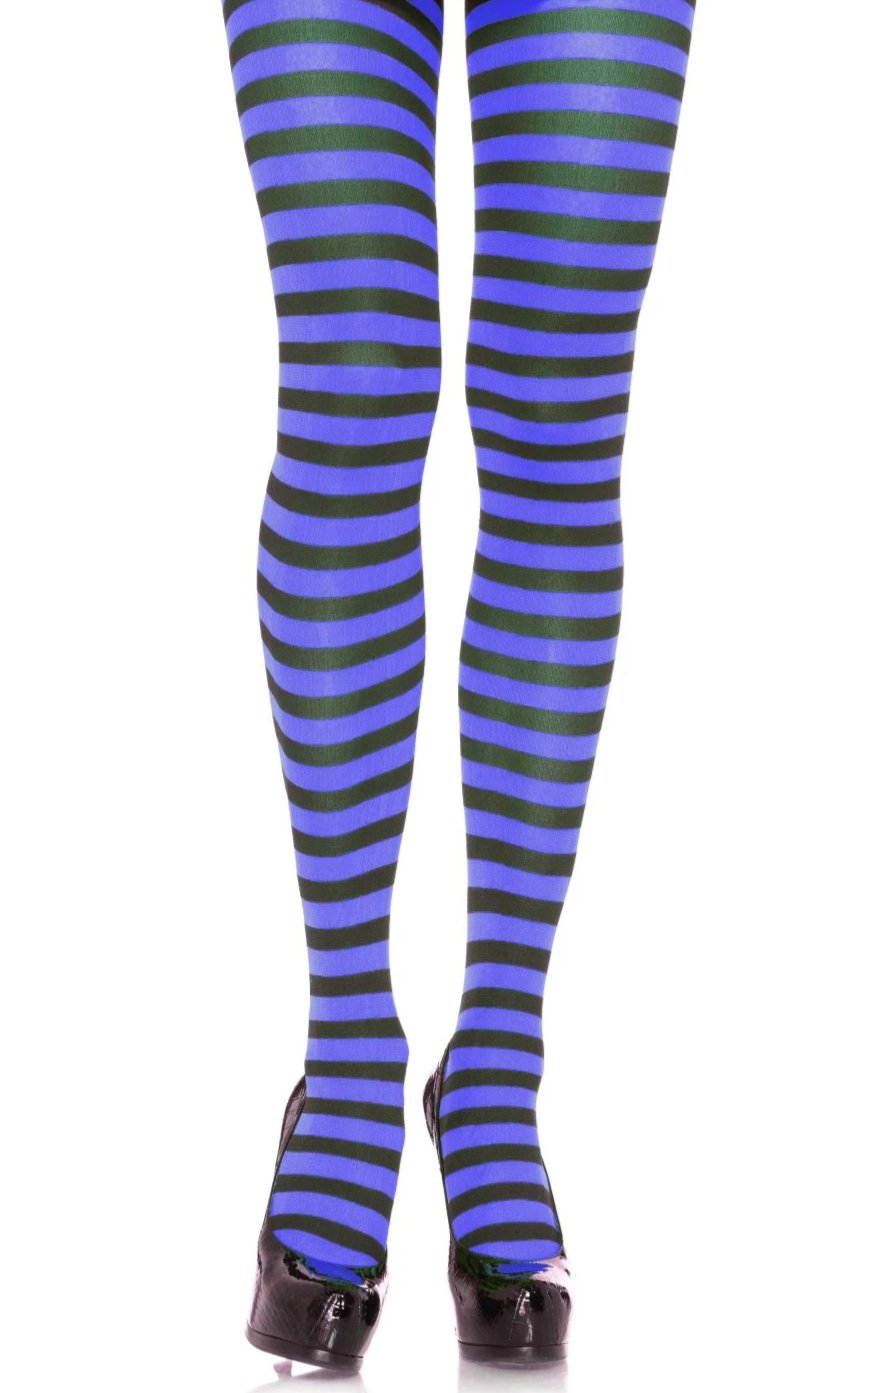 Leg Avenue 7100 Nylon Stripe Tights - blue and black horizontal striped pantyhose